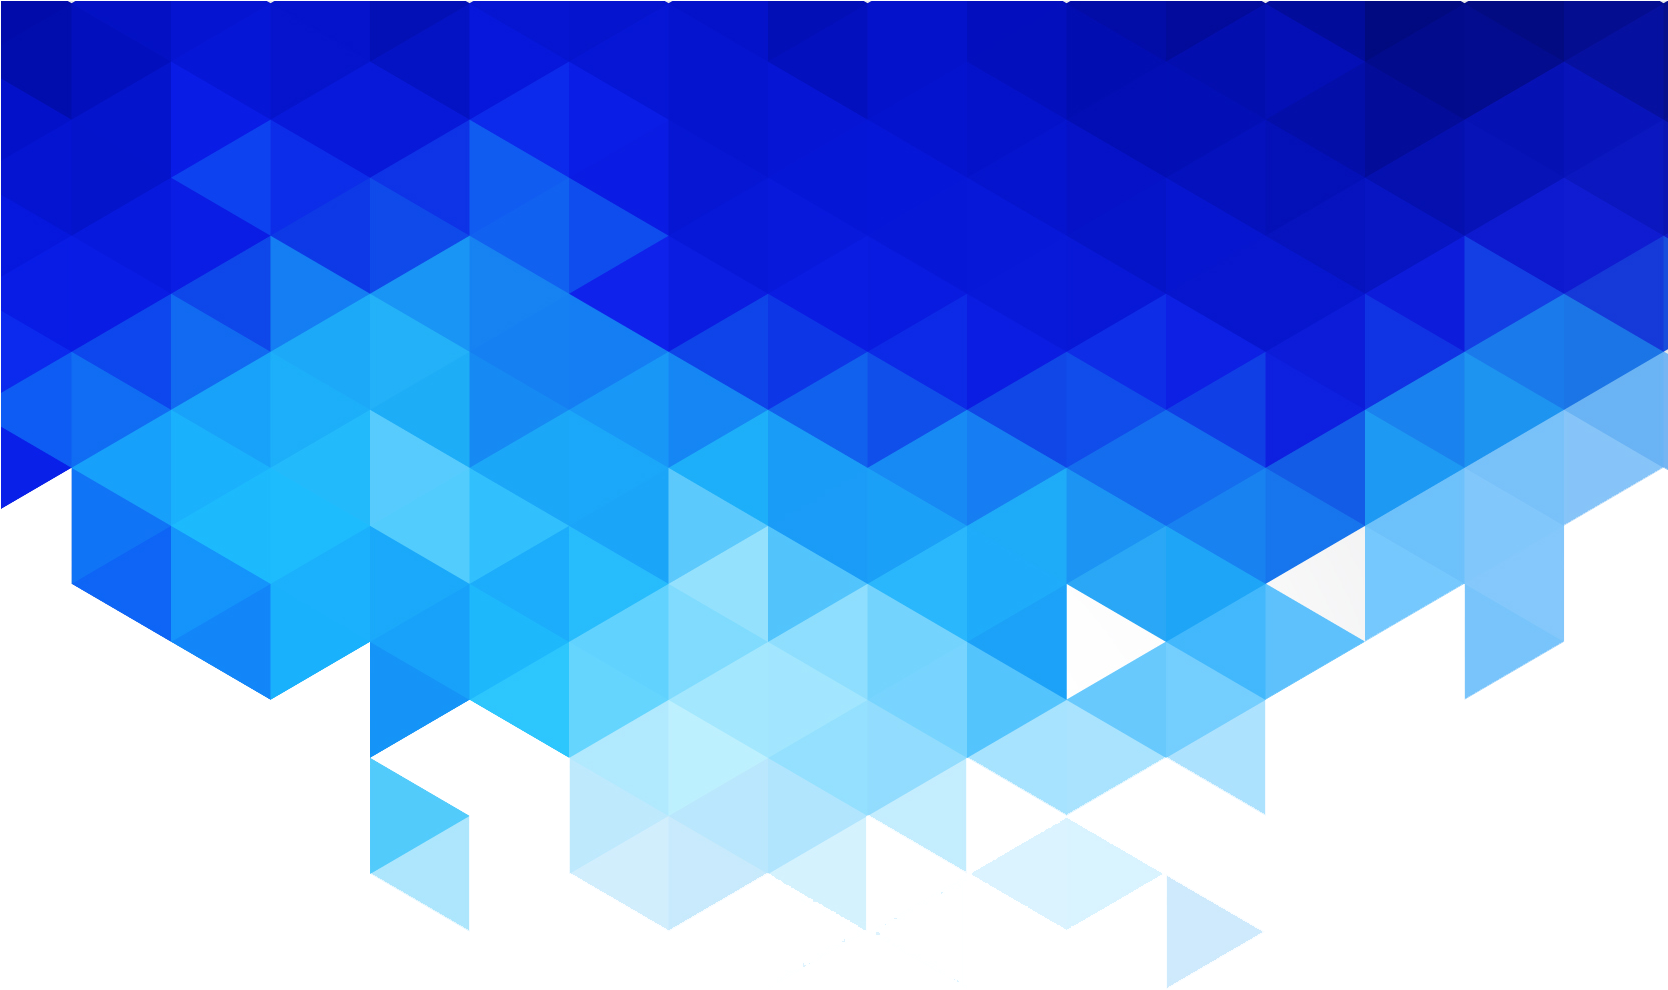 Textura abstracta azul PNG imagen transparente